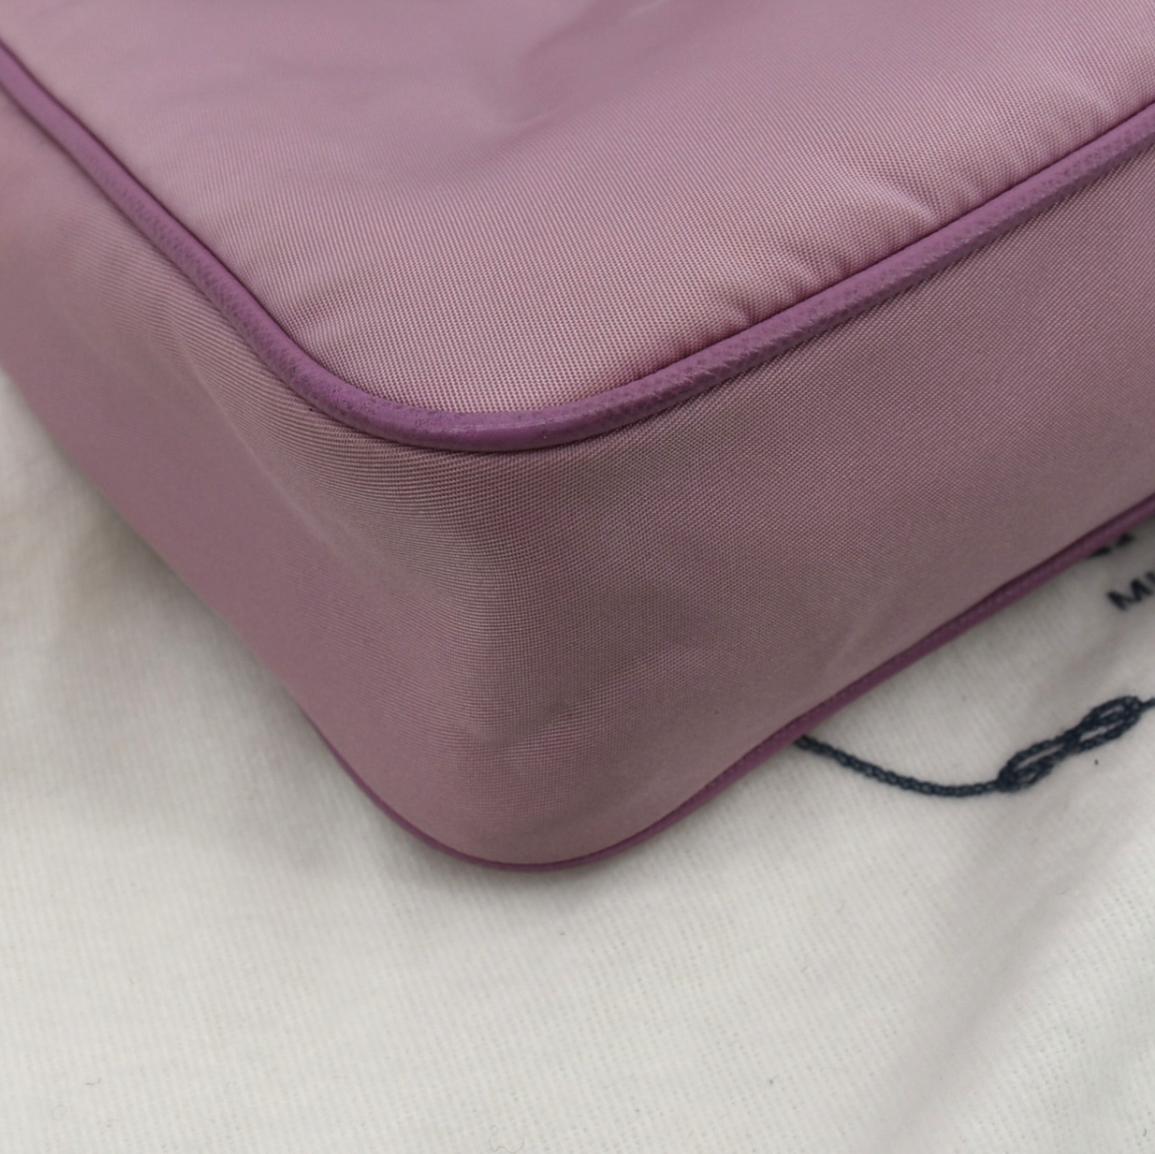 Re-edition leather handbag Prada Pink in Leather - 33069795